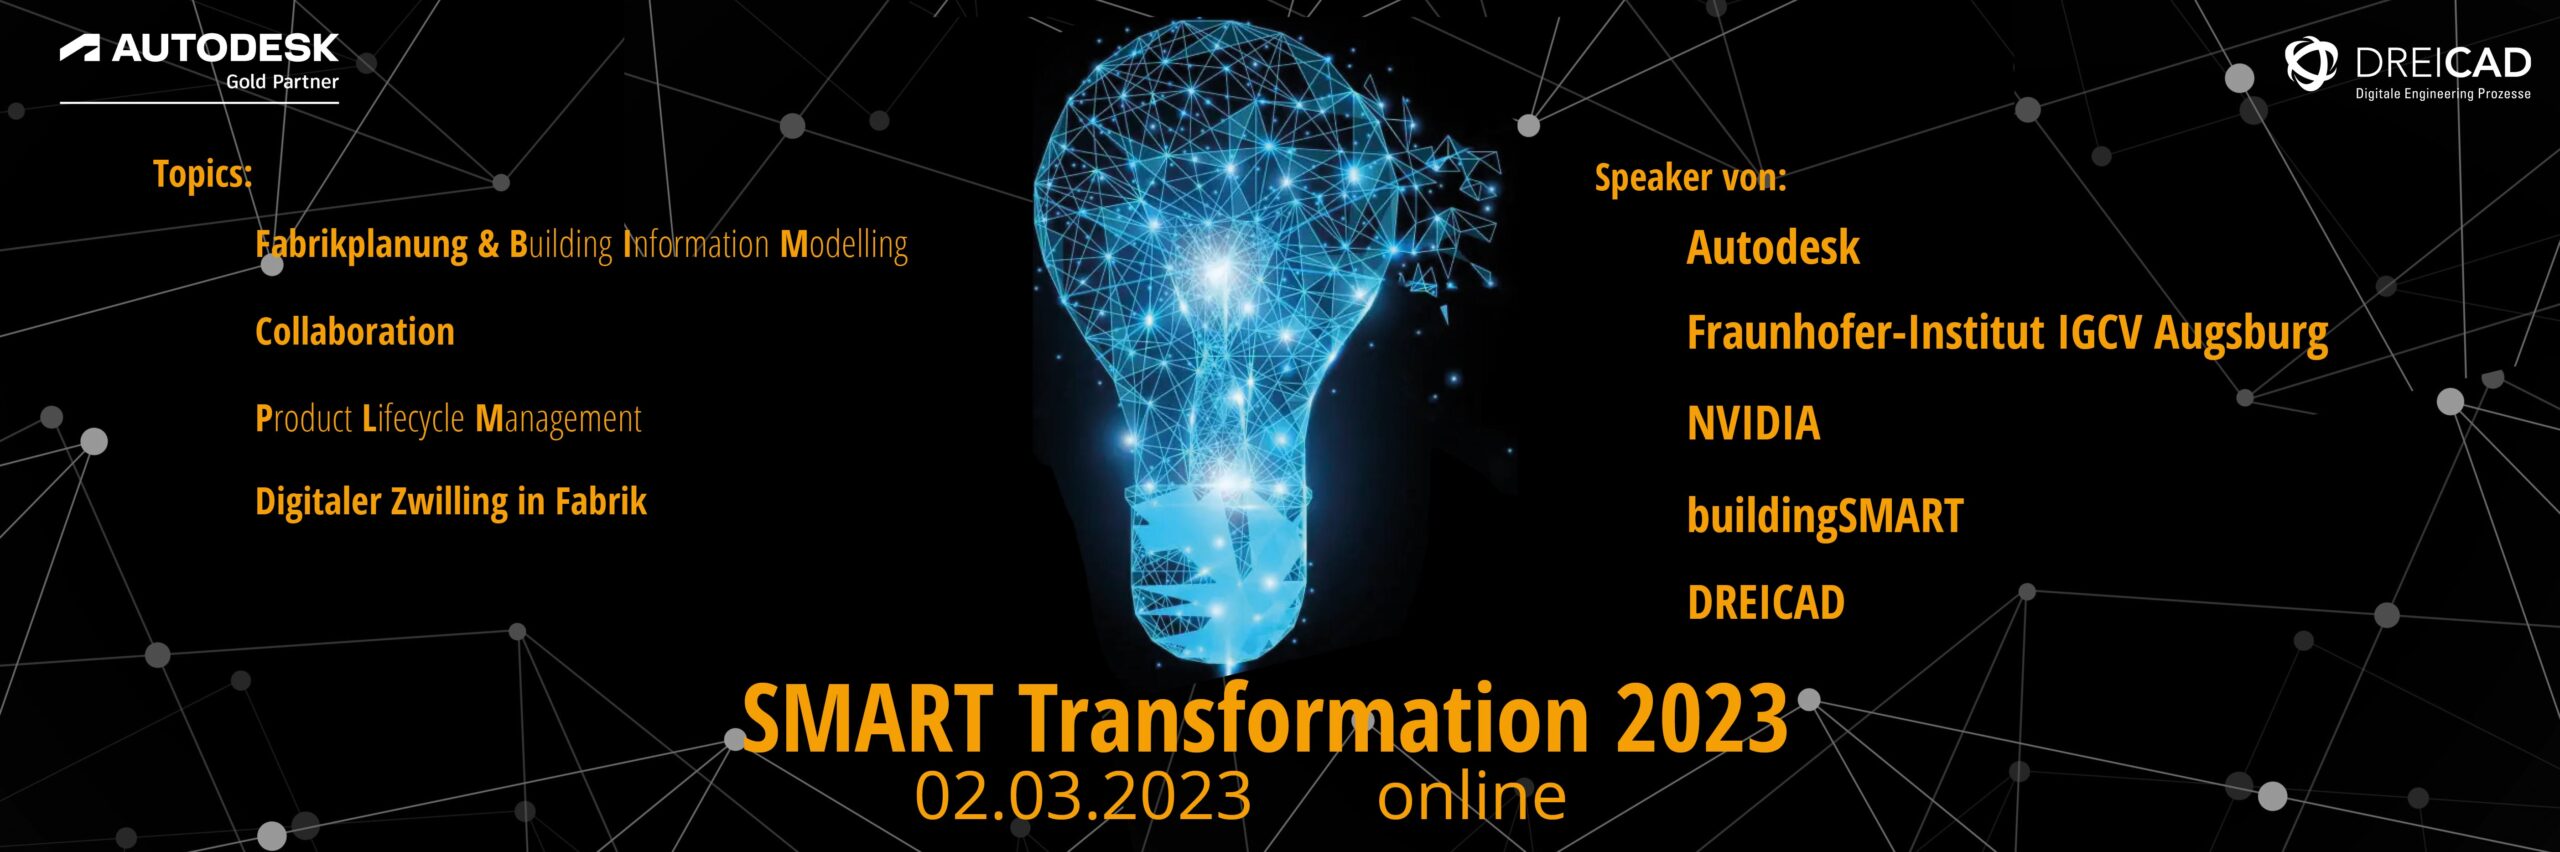 Event-Header: SMART Transformation 2023